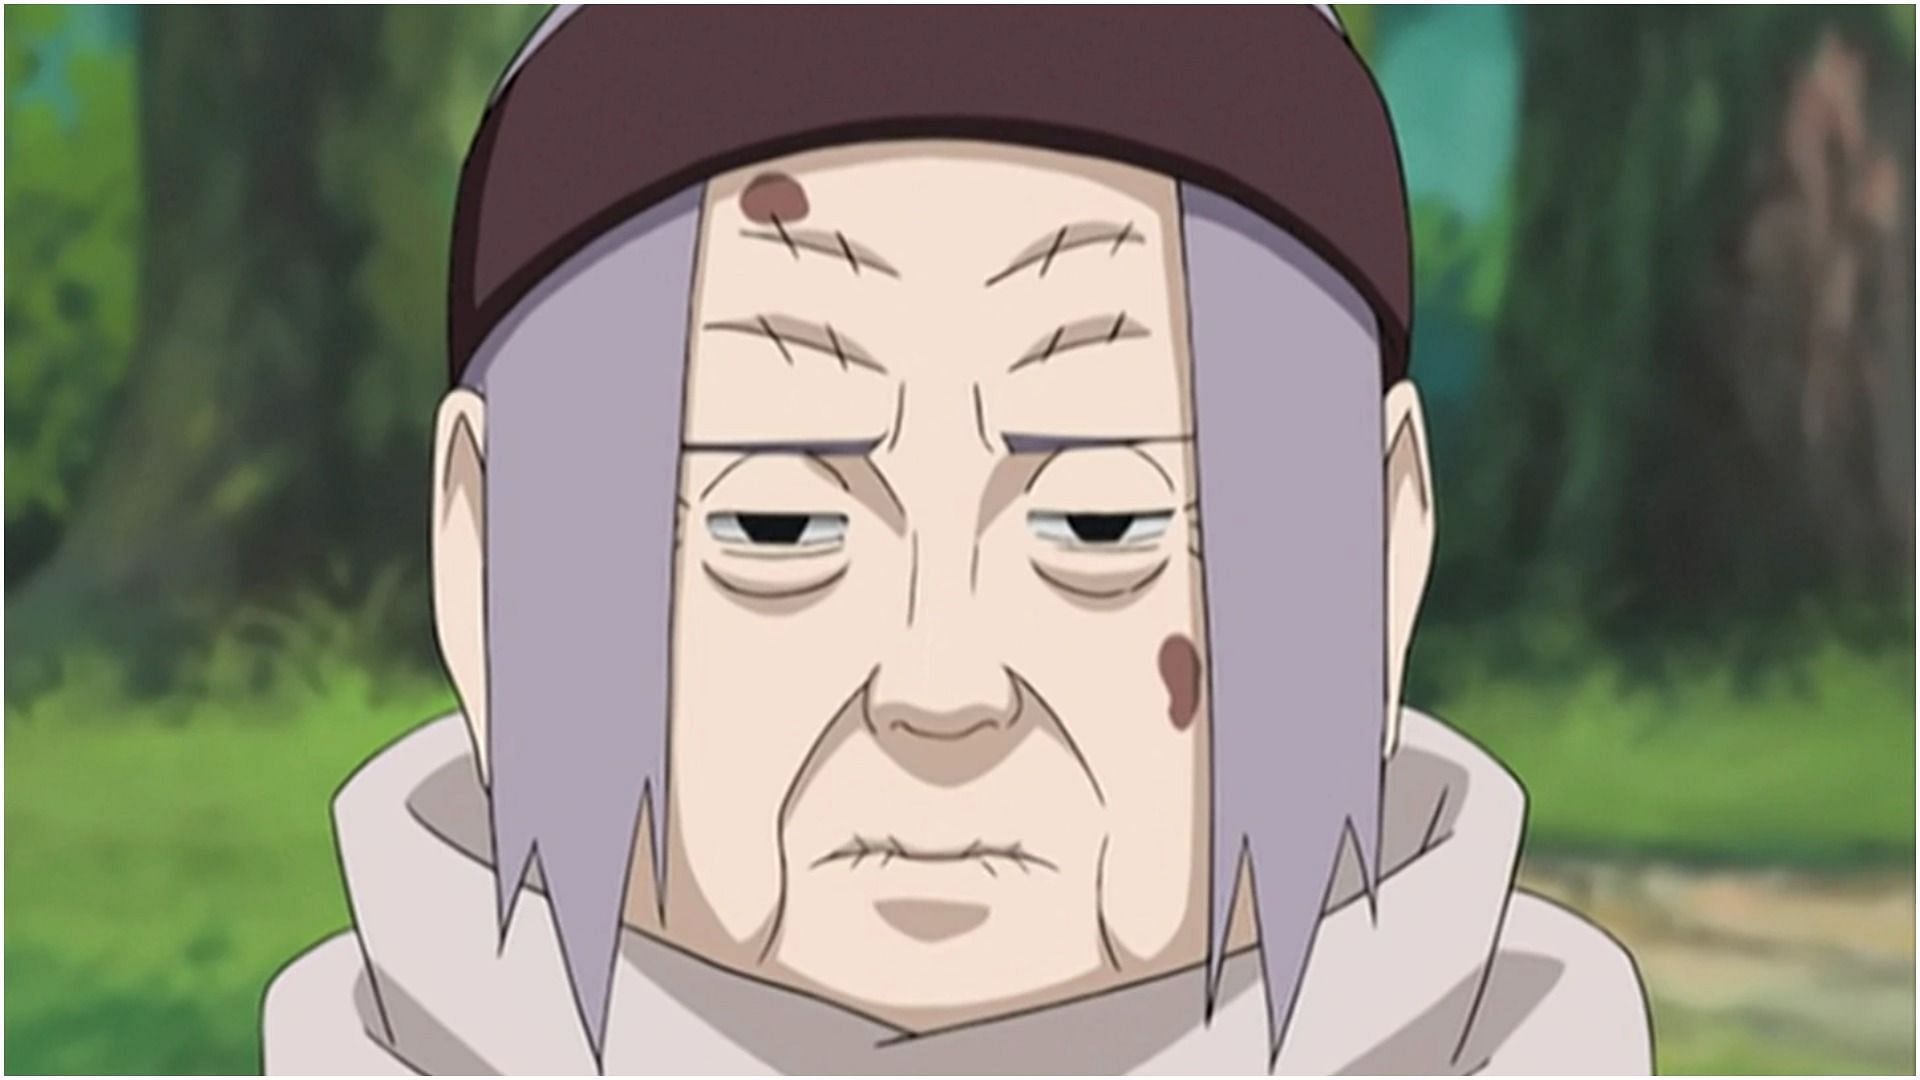 Chiyo as seen in Naruto (Image via Studio Pierrot)